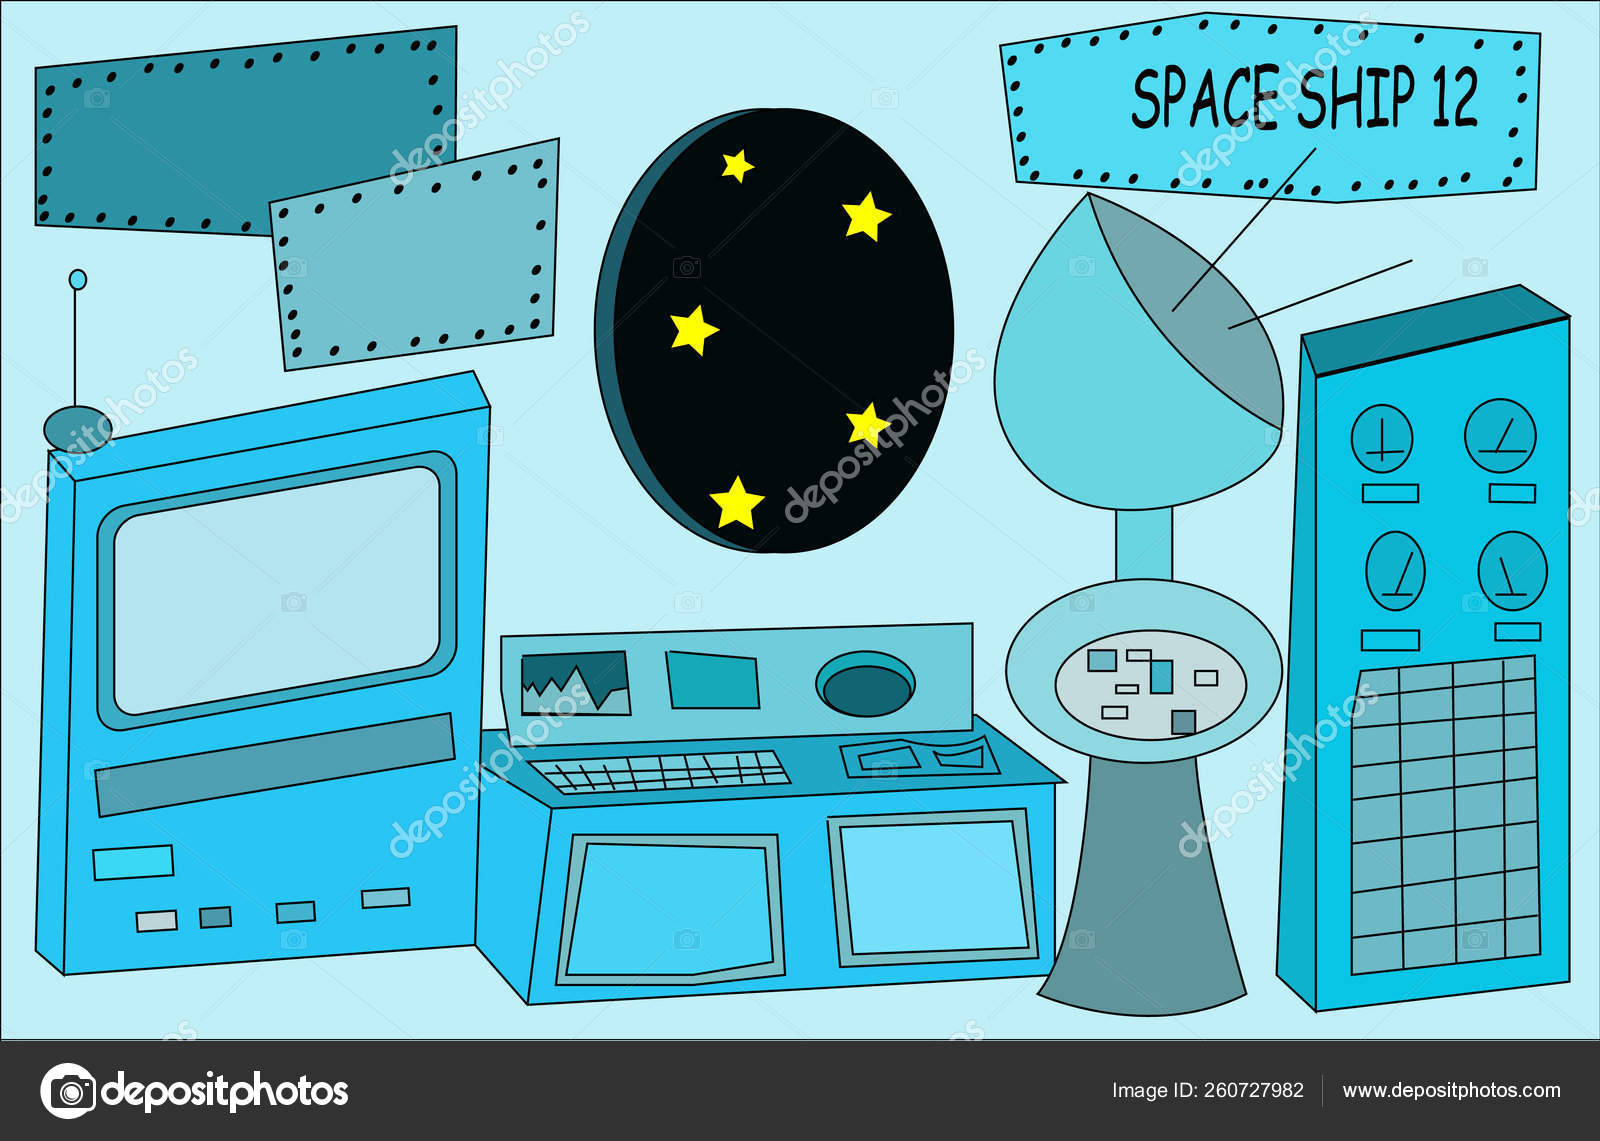 Cartoon inside spaceship Stock Photos, Royalty Free Cartoon inside spaceship  Images | Depositphotos